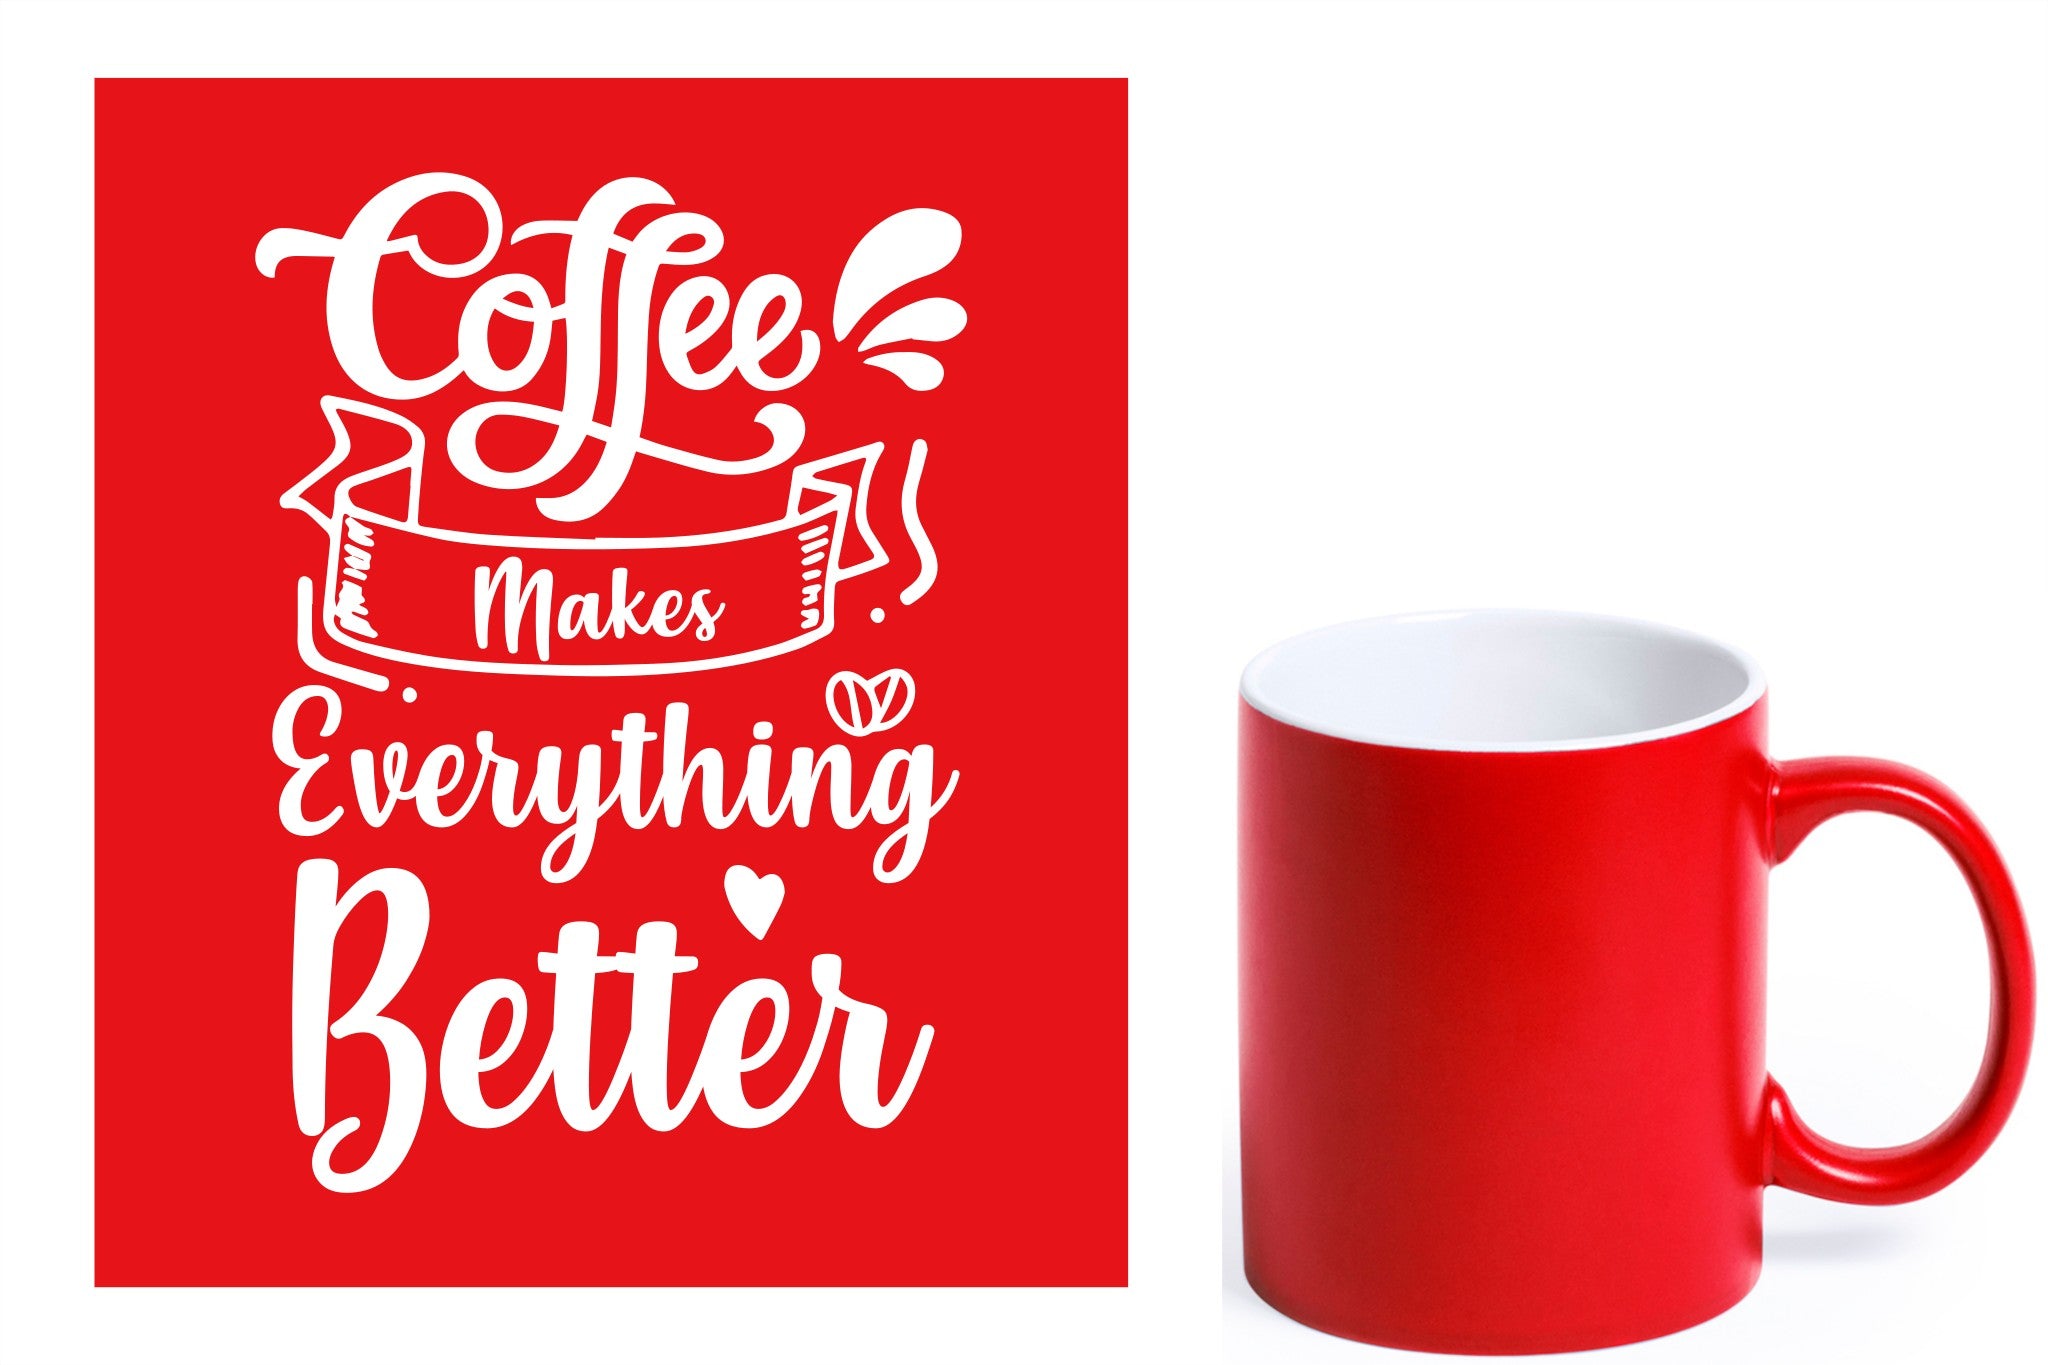 rode keramische mok met witte gravure  'Coffee makes everything better'.